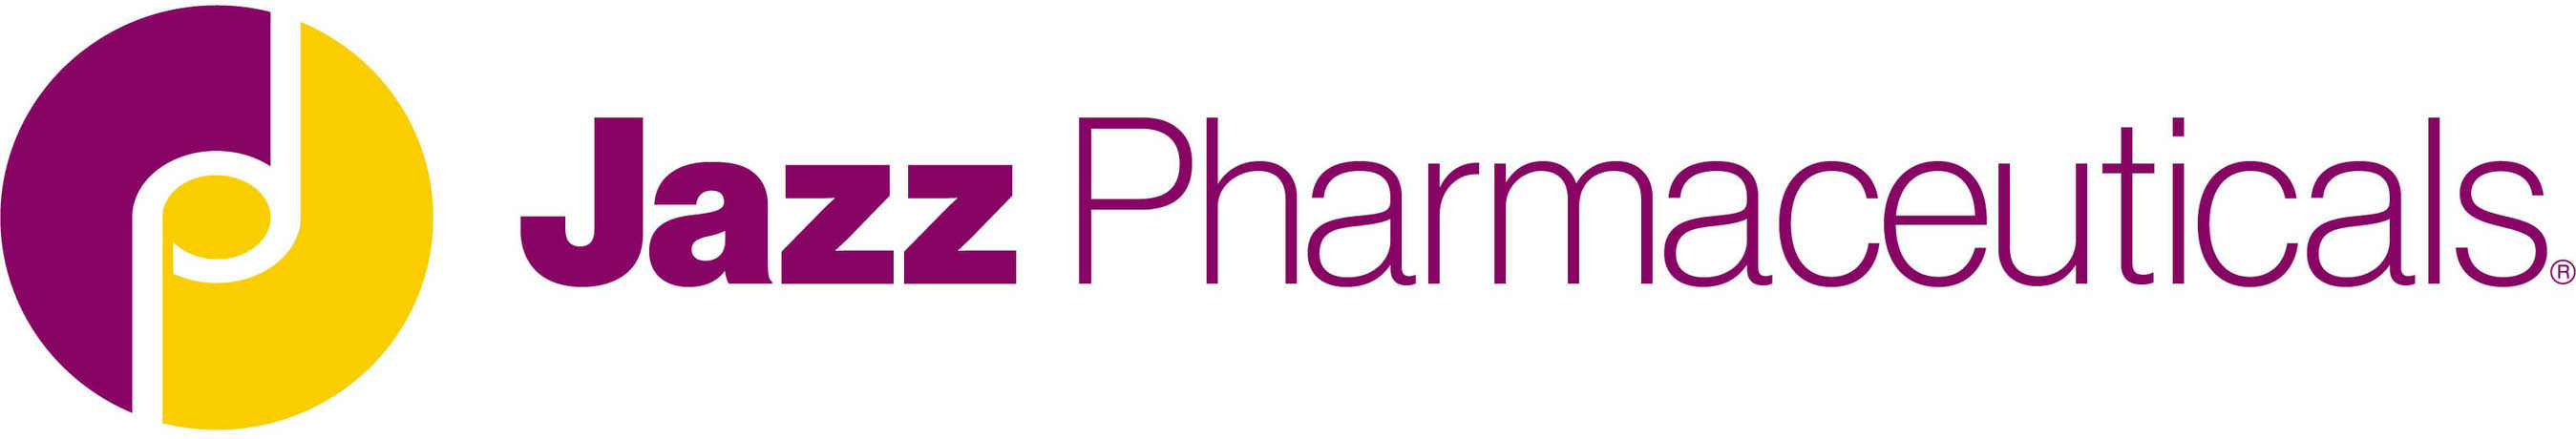 Jazz_Pharmaceuticals_New_Logo.jpg